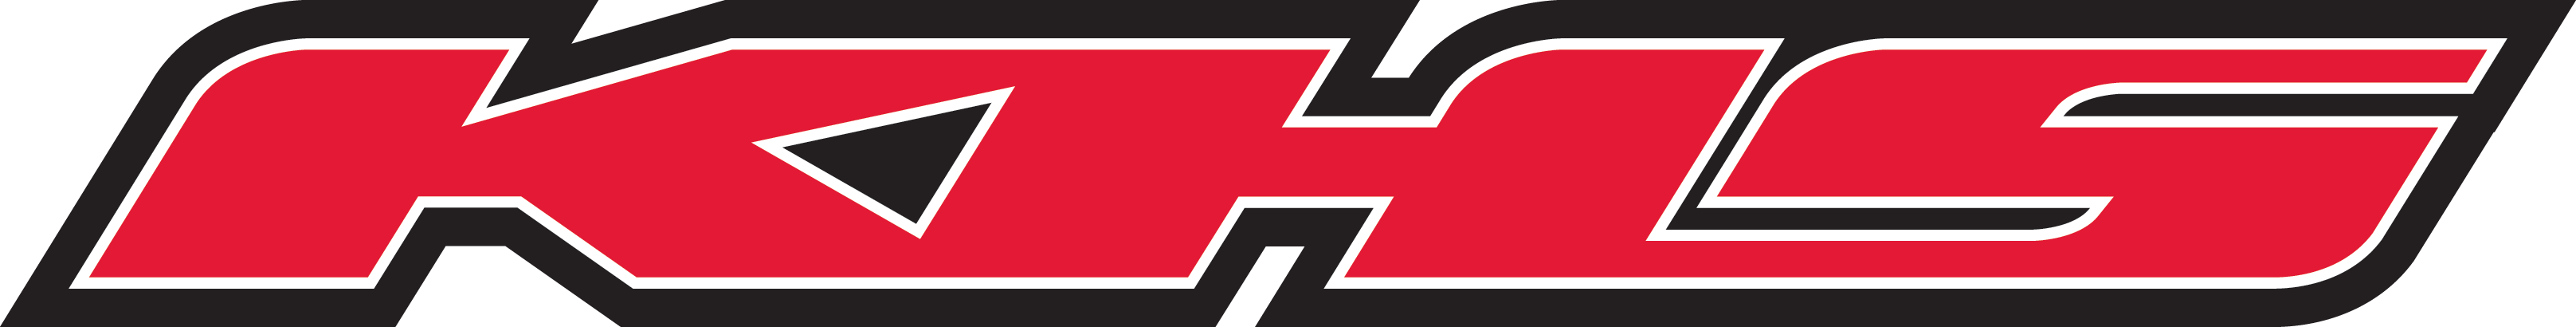 KHS Logo - KHS-Red-Black-White-Logo | Yackle Brothers Racing